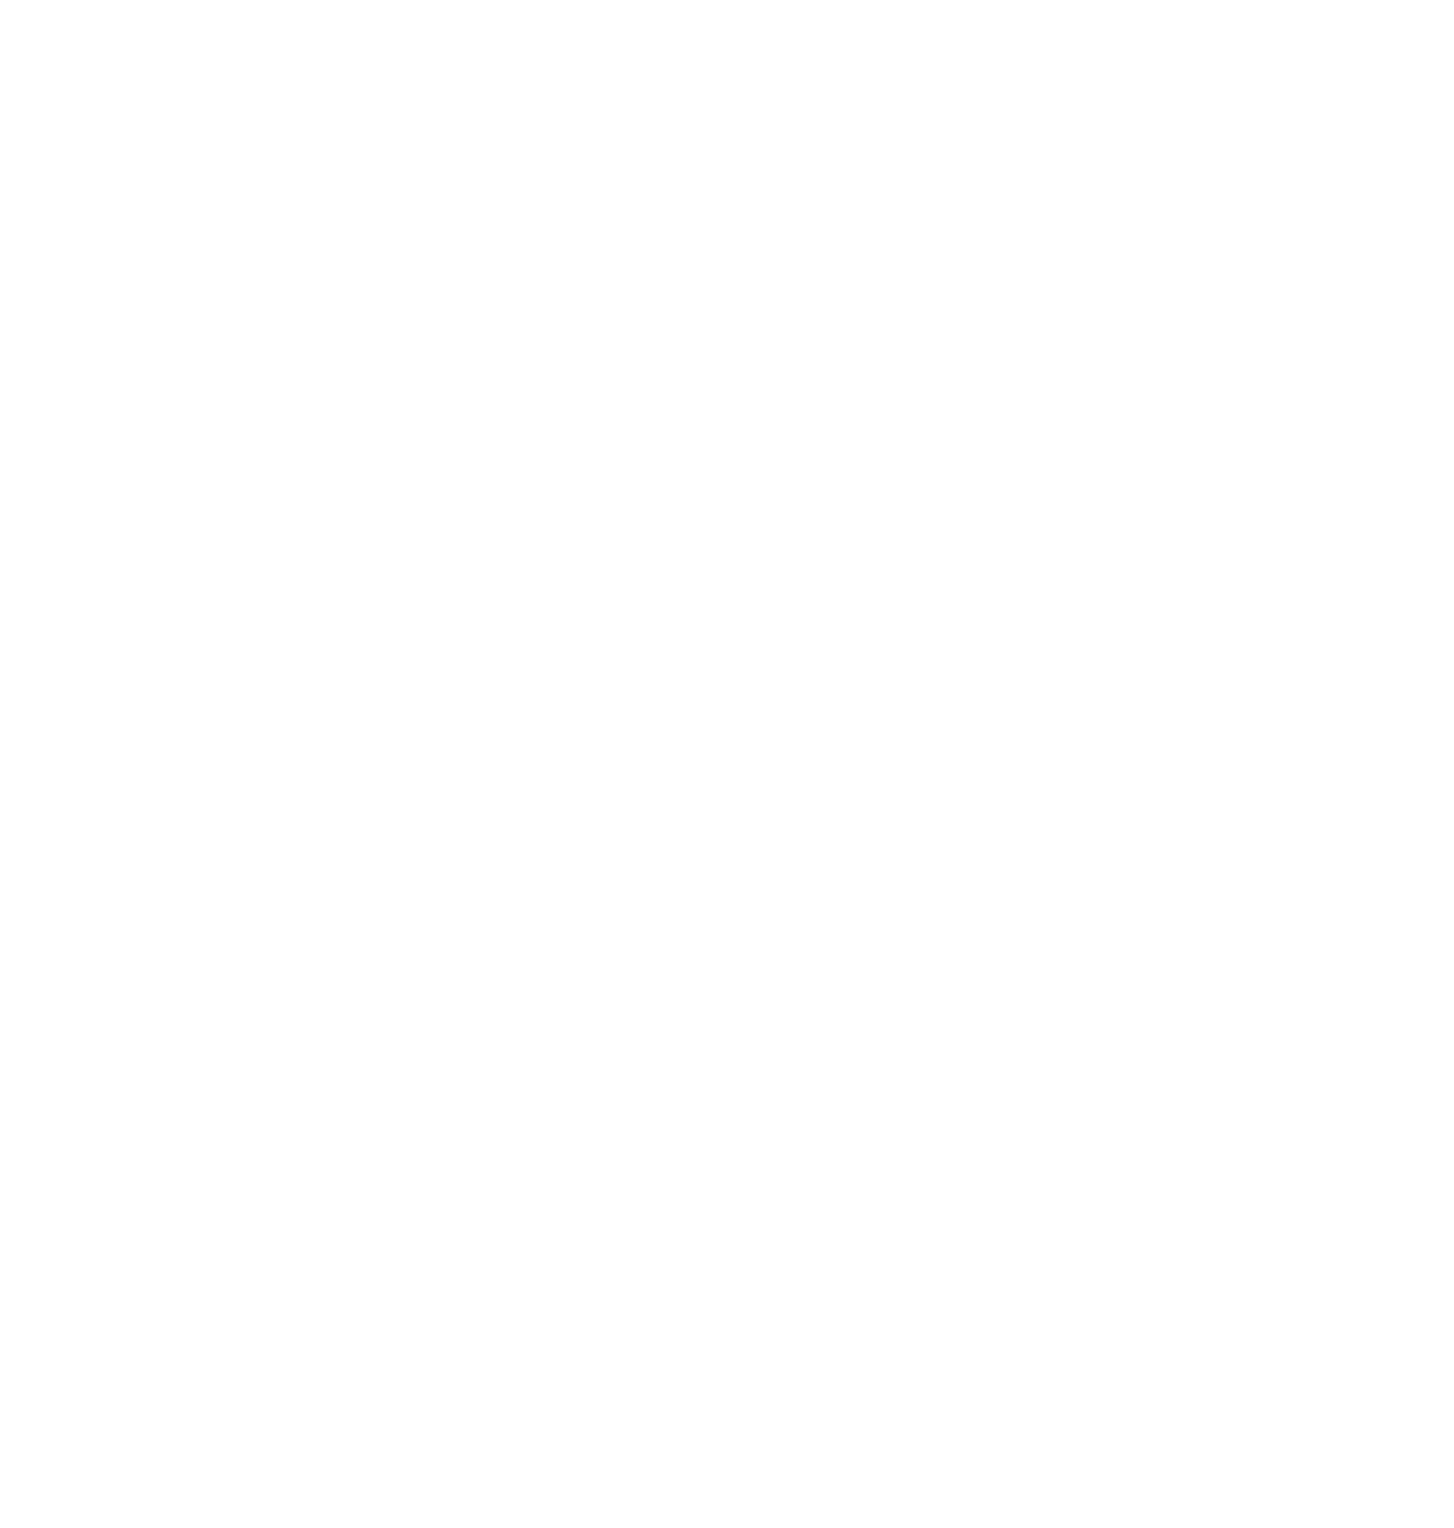 Telia Company logo for dark backgrounds (transparent PNG)